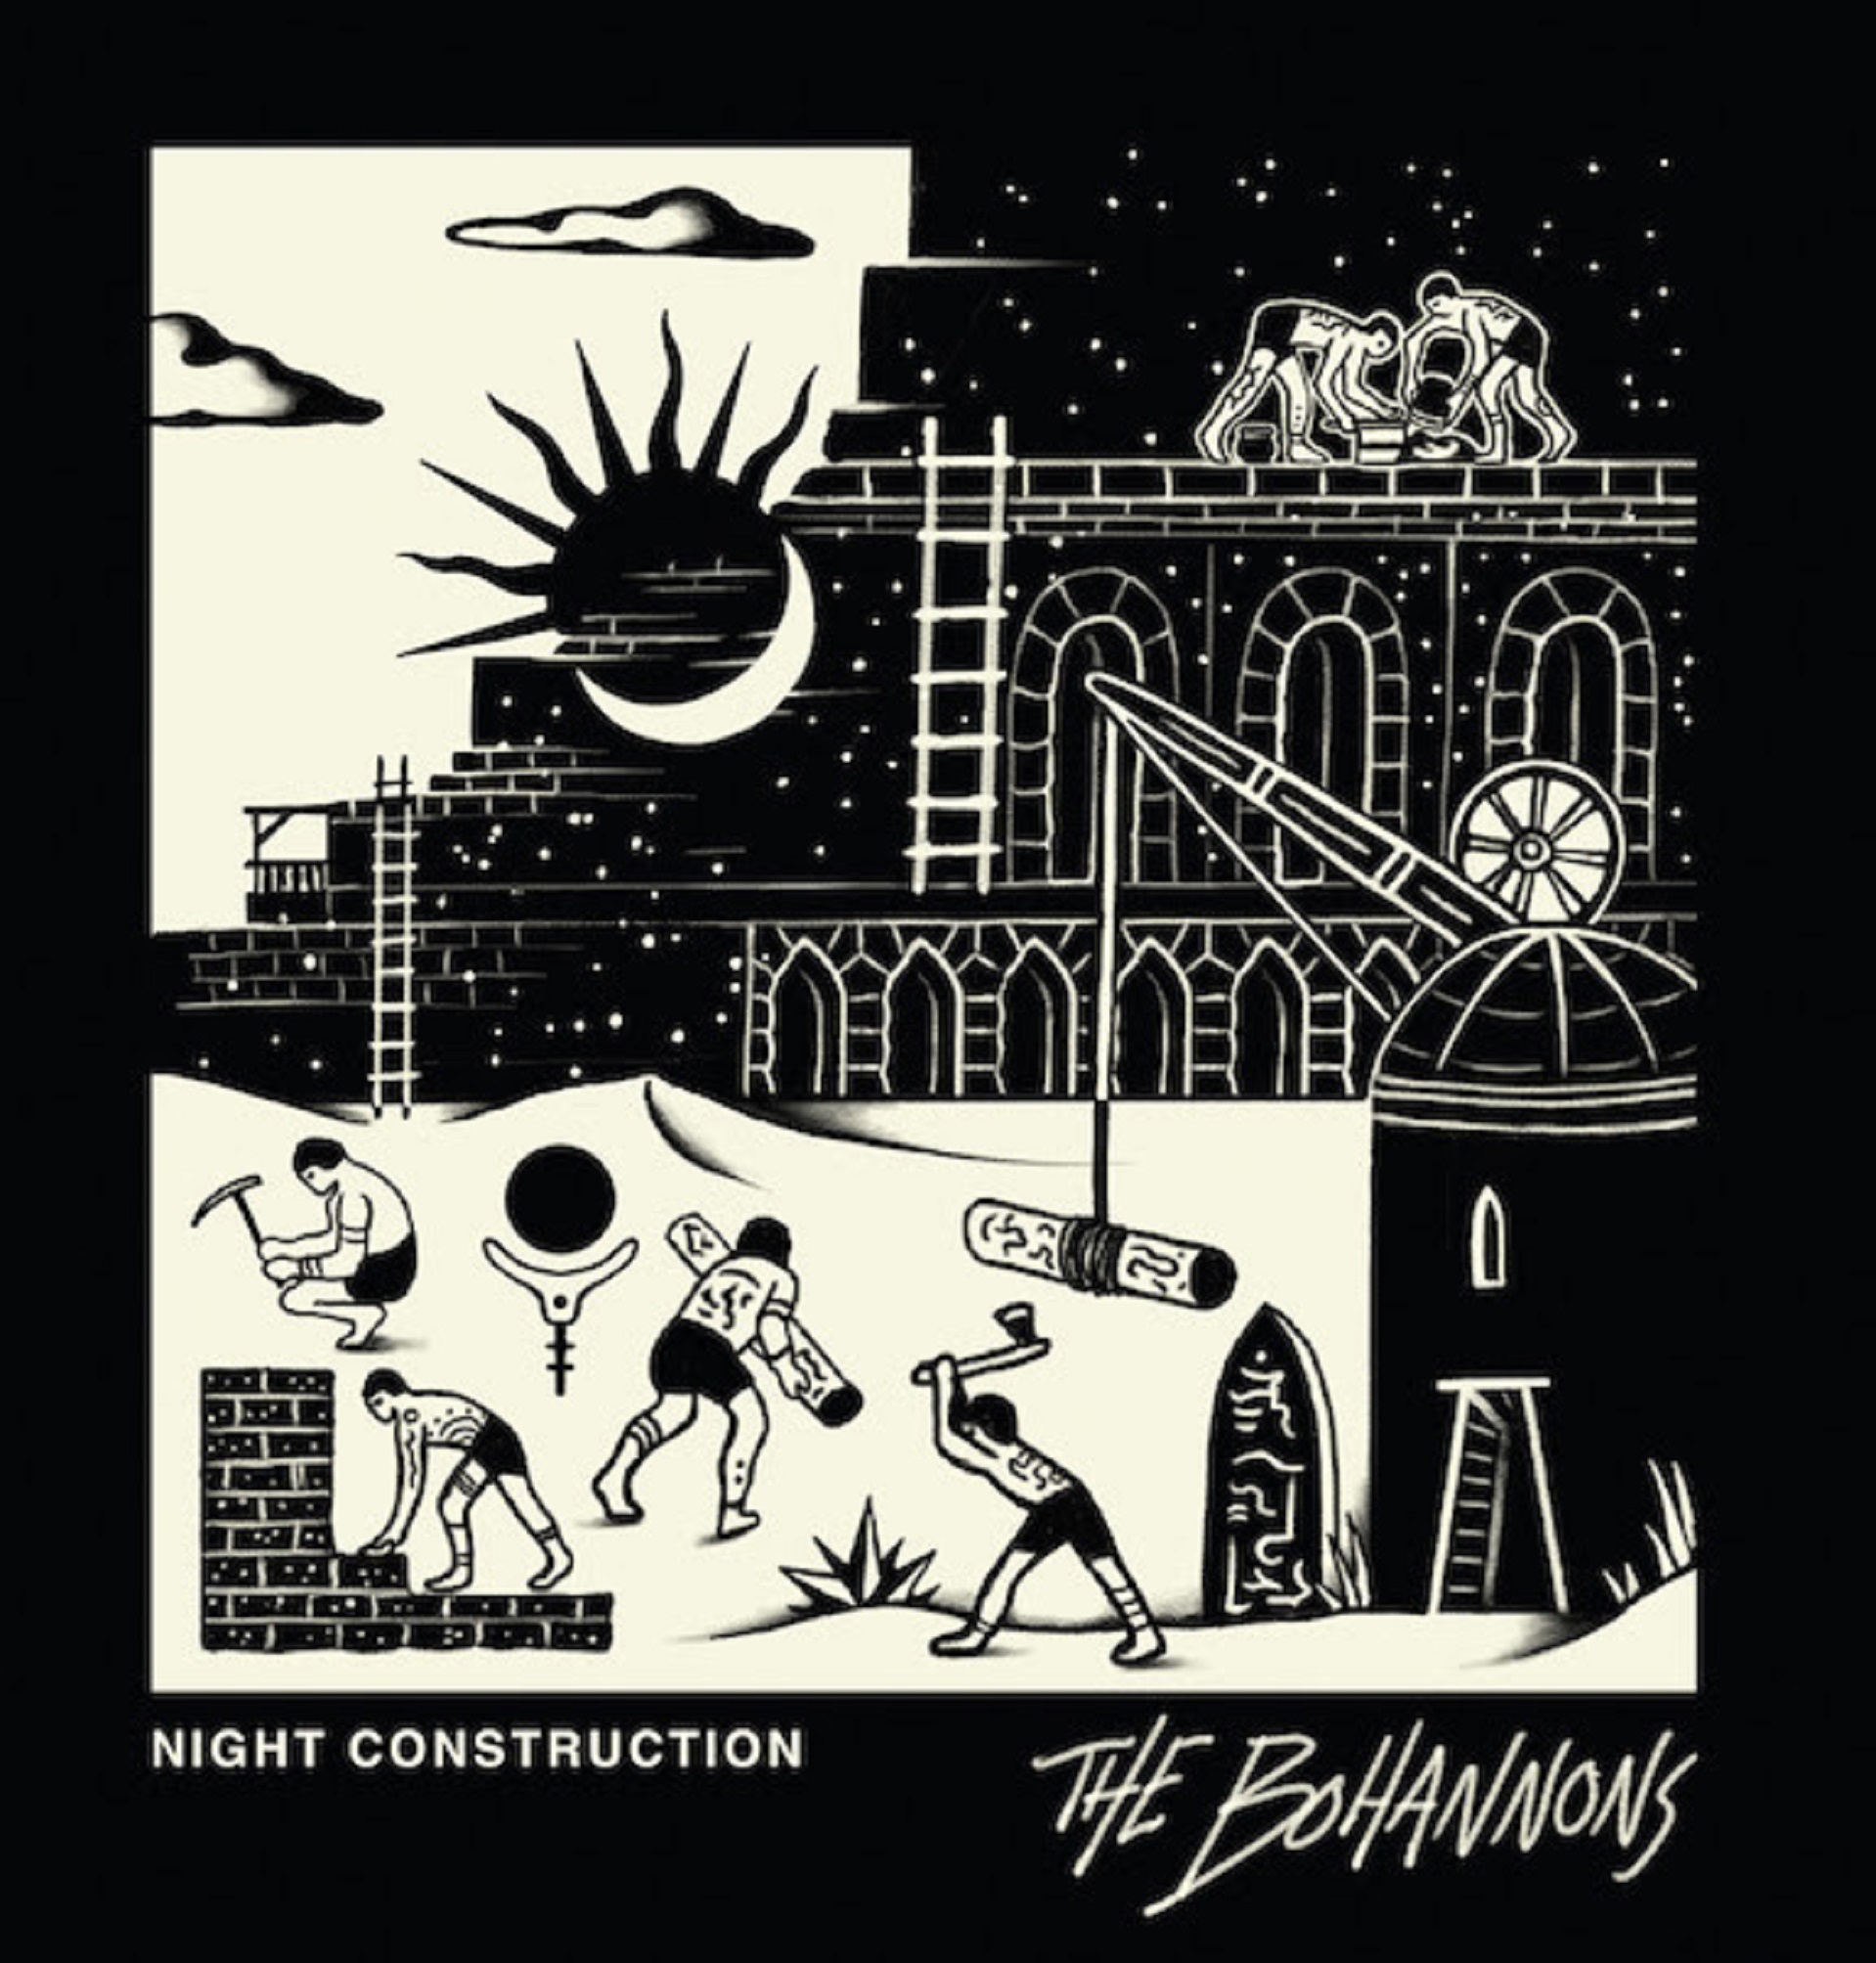 Bohannons release new album "Night Construction"